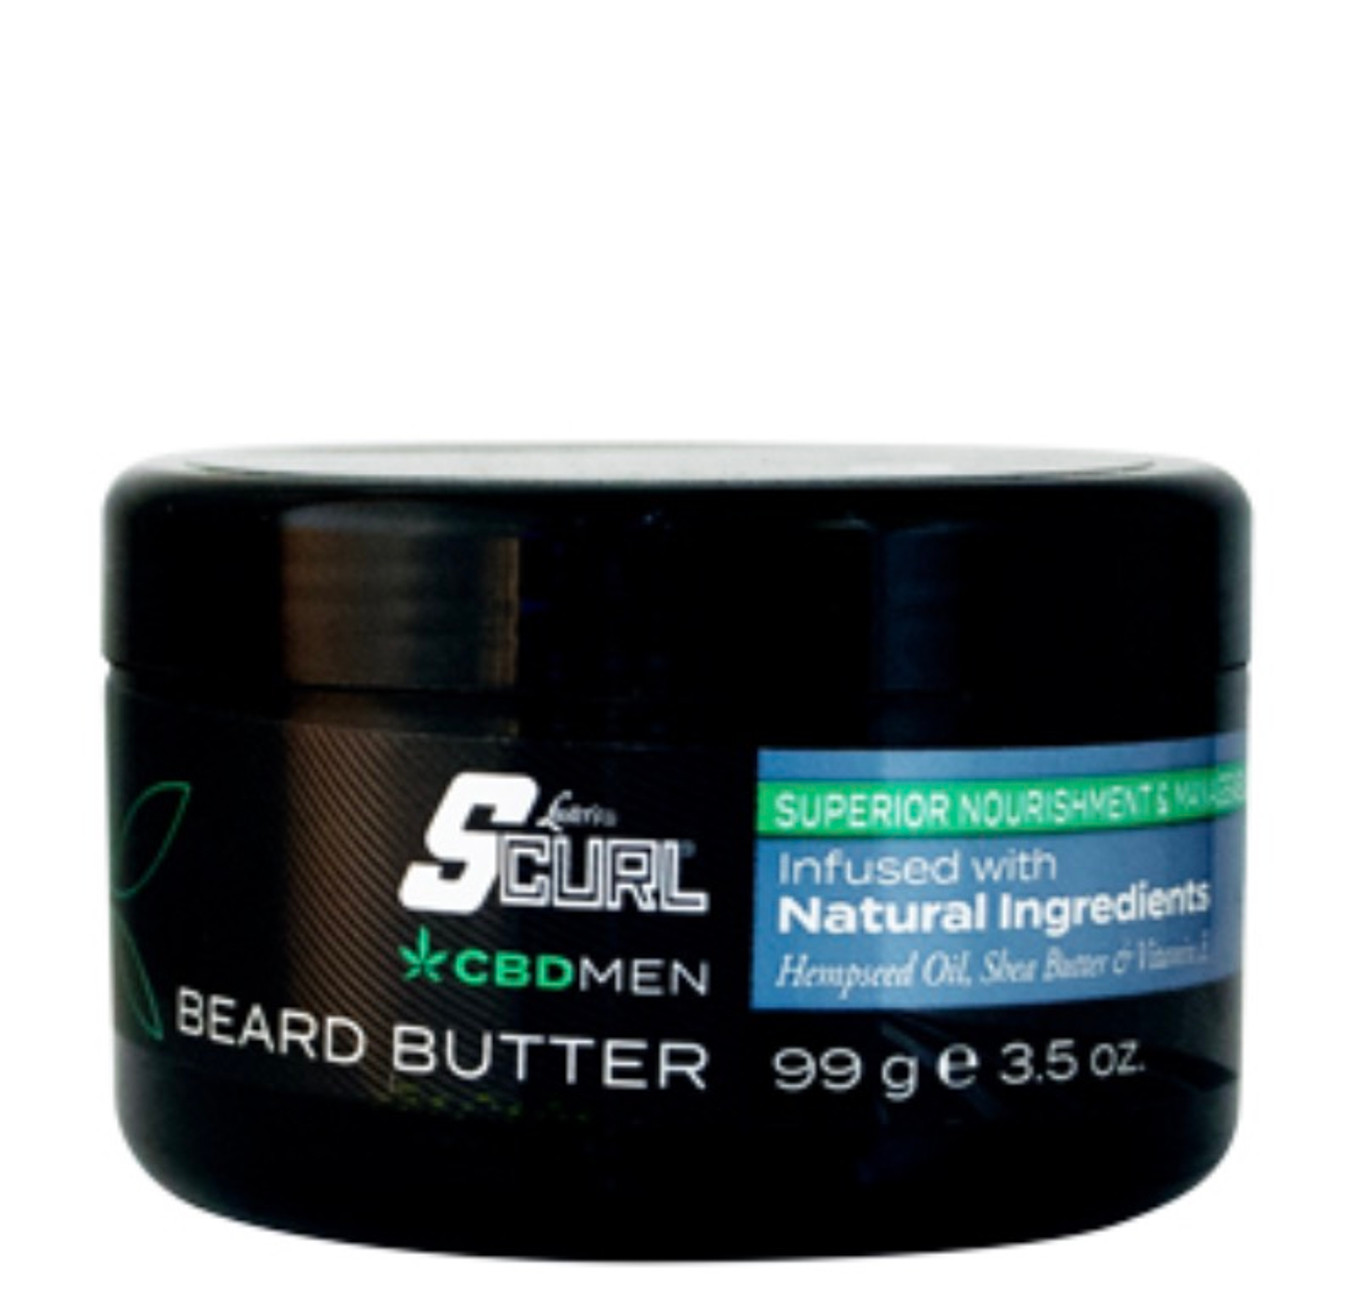 Lusters Scurl CBD Men Beard Butter (3.5 oz)